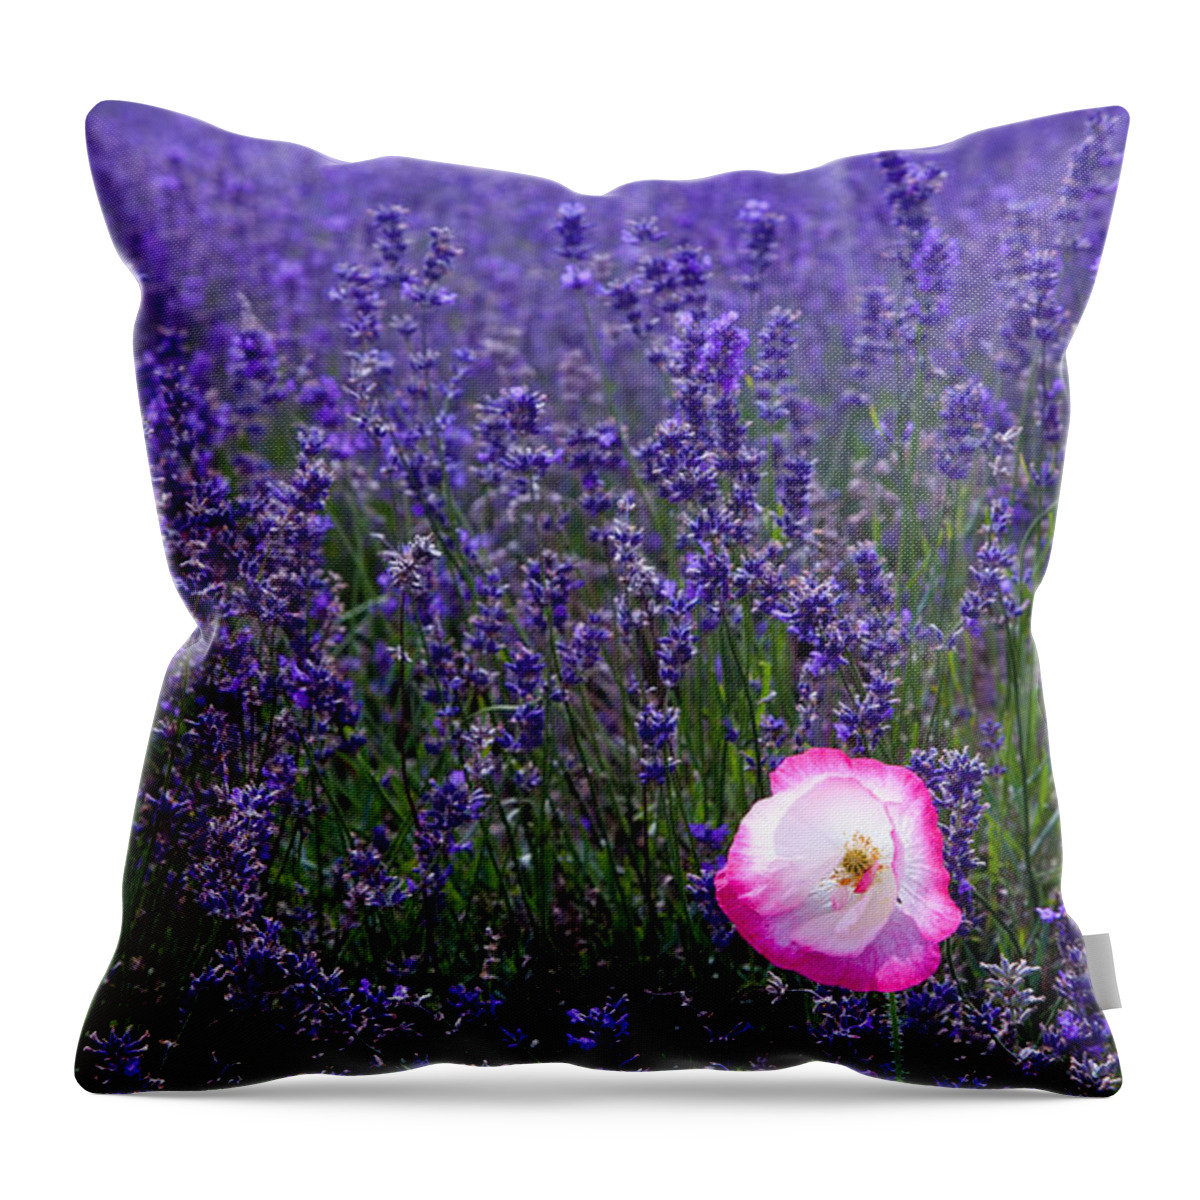  Abundance Throw Pillow featuring the photograph Lavender field with poppy by Simon Bratt